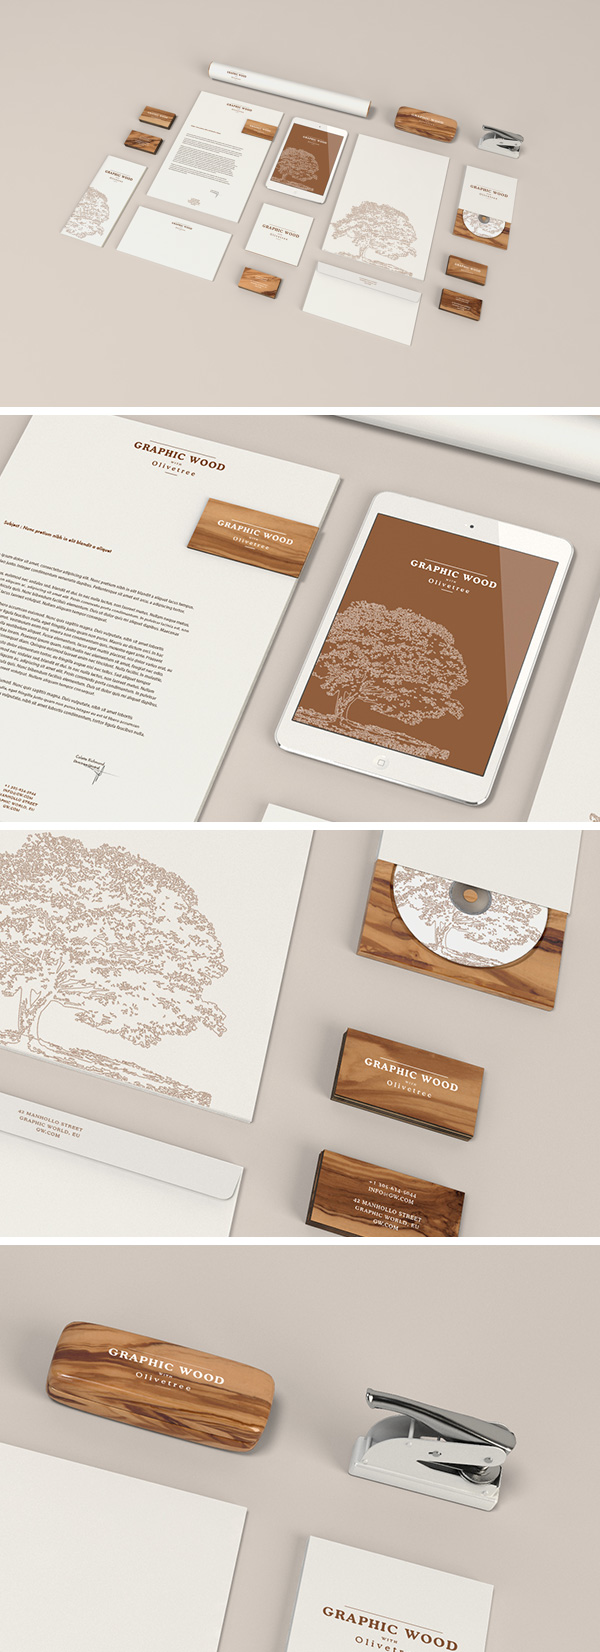 Stationery MockUp – Wood Edition